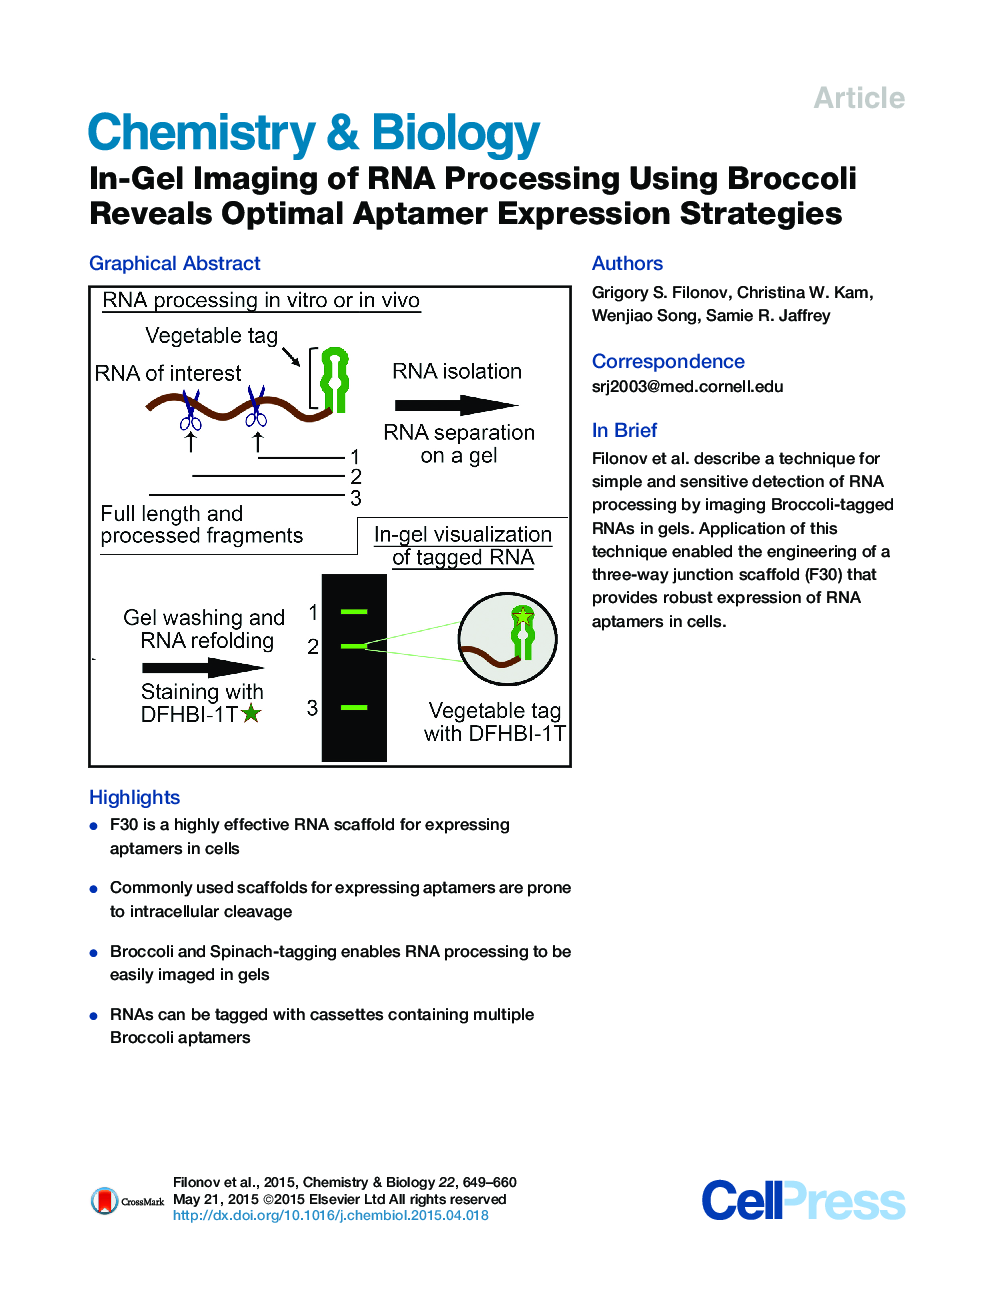 In-Gel Imaging of RNA Processing Using Broccoli Reveals Optimal Aptamer Expression Strategies